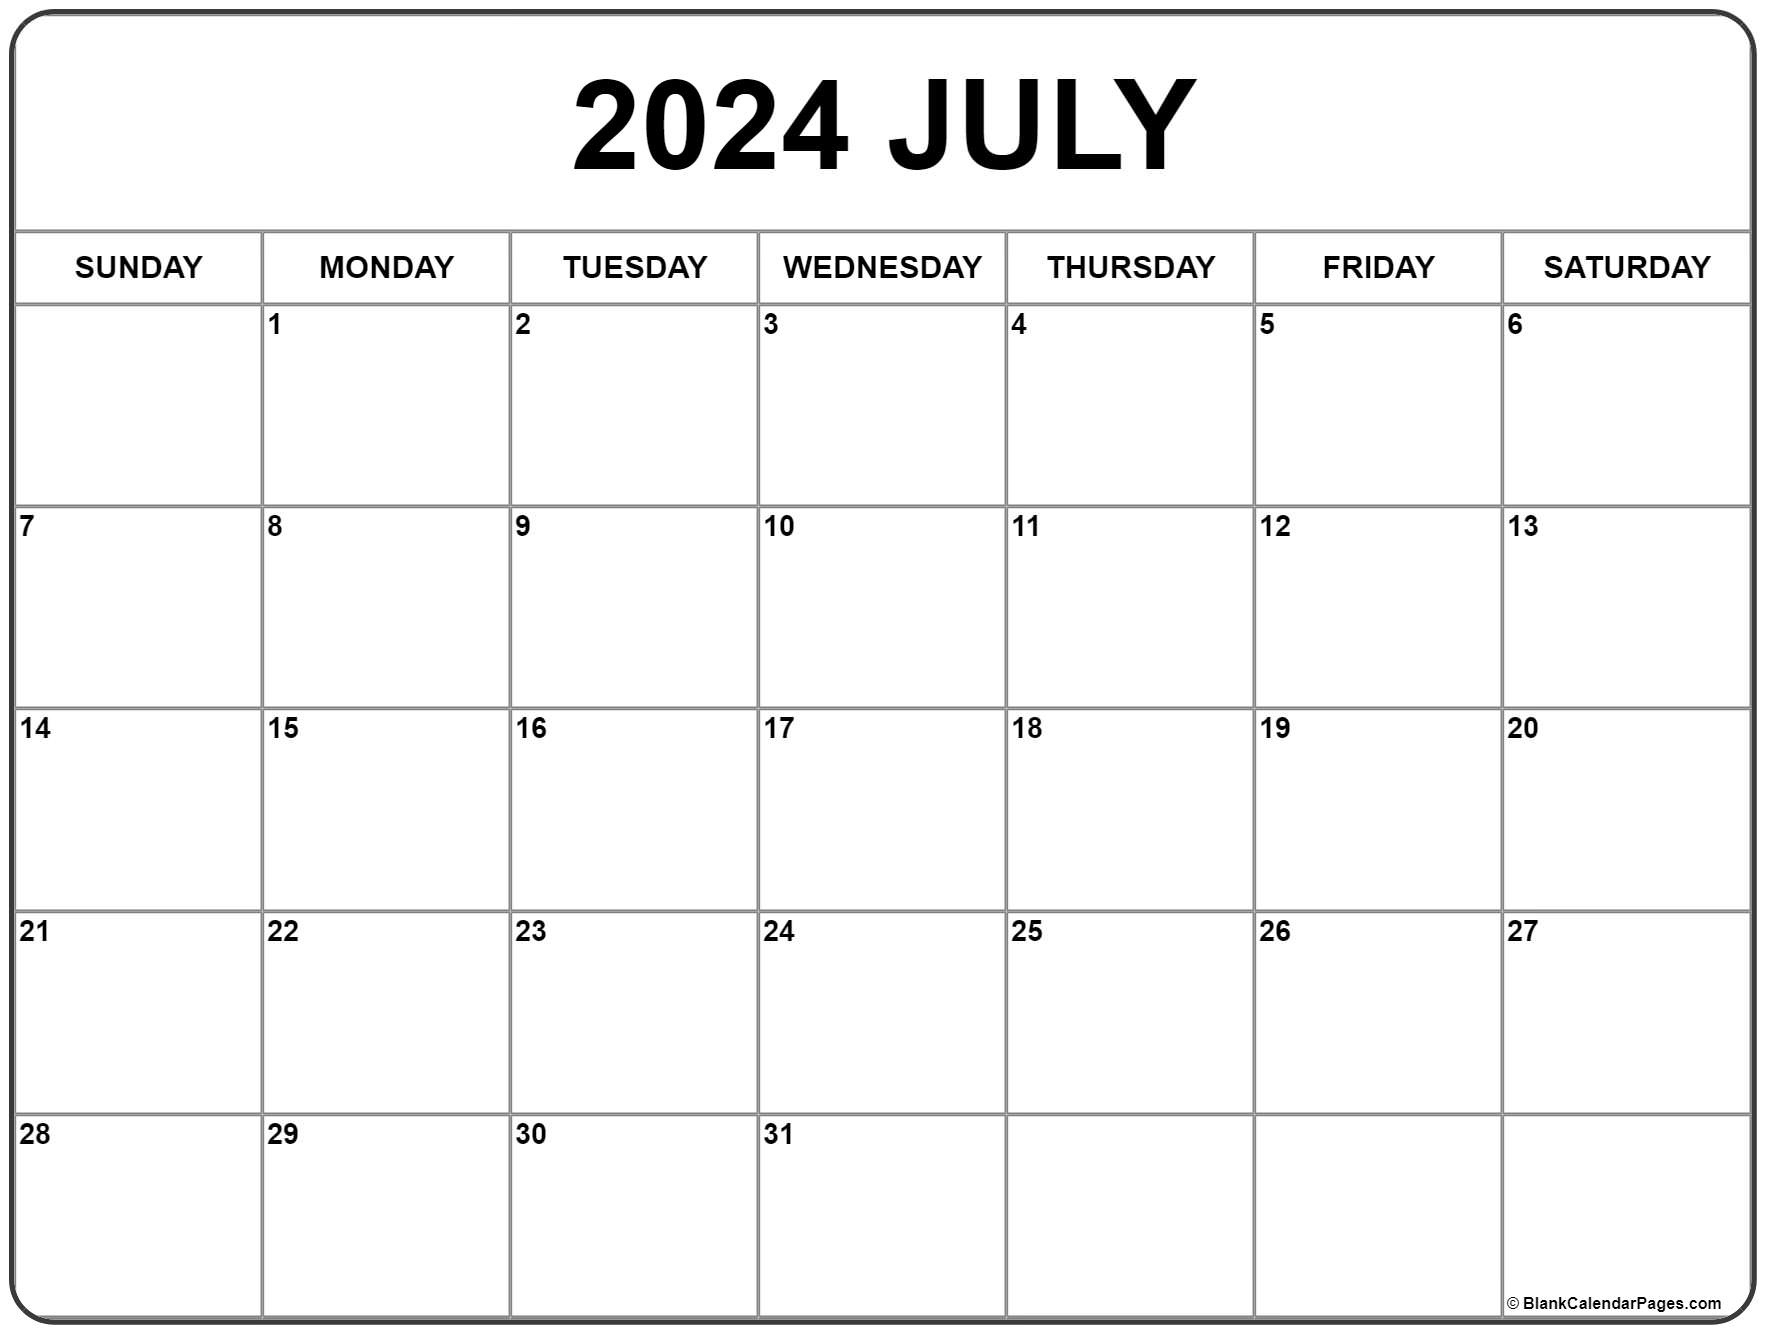 July 2024 Calendar | Free Printable Calendar within Month of July Printable Calendar 2024